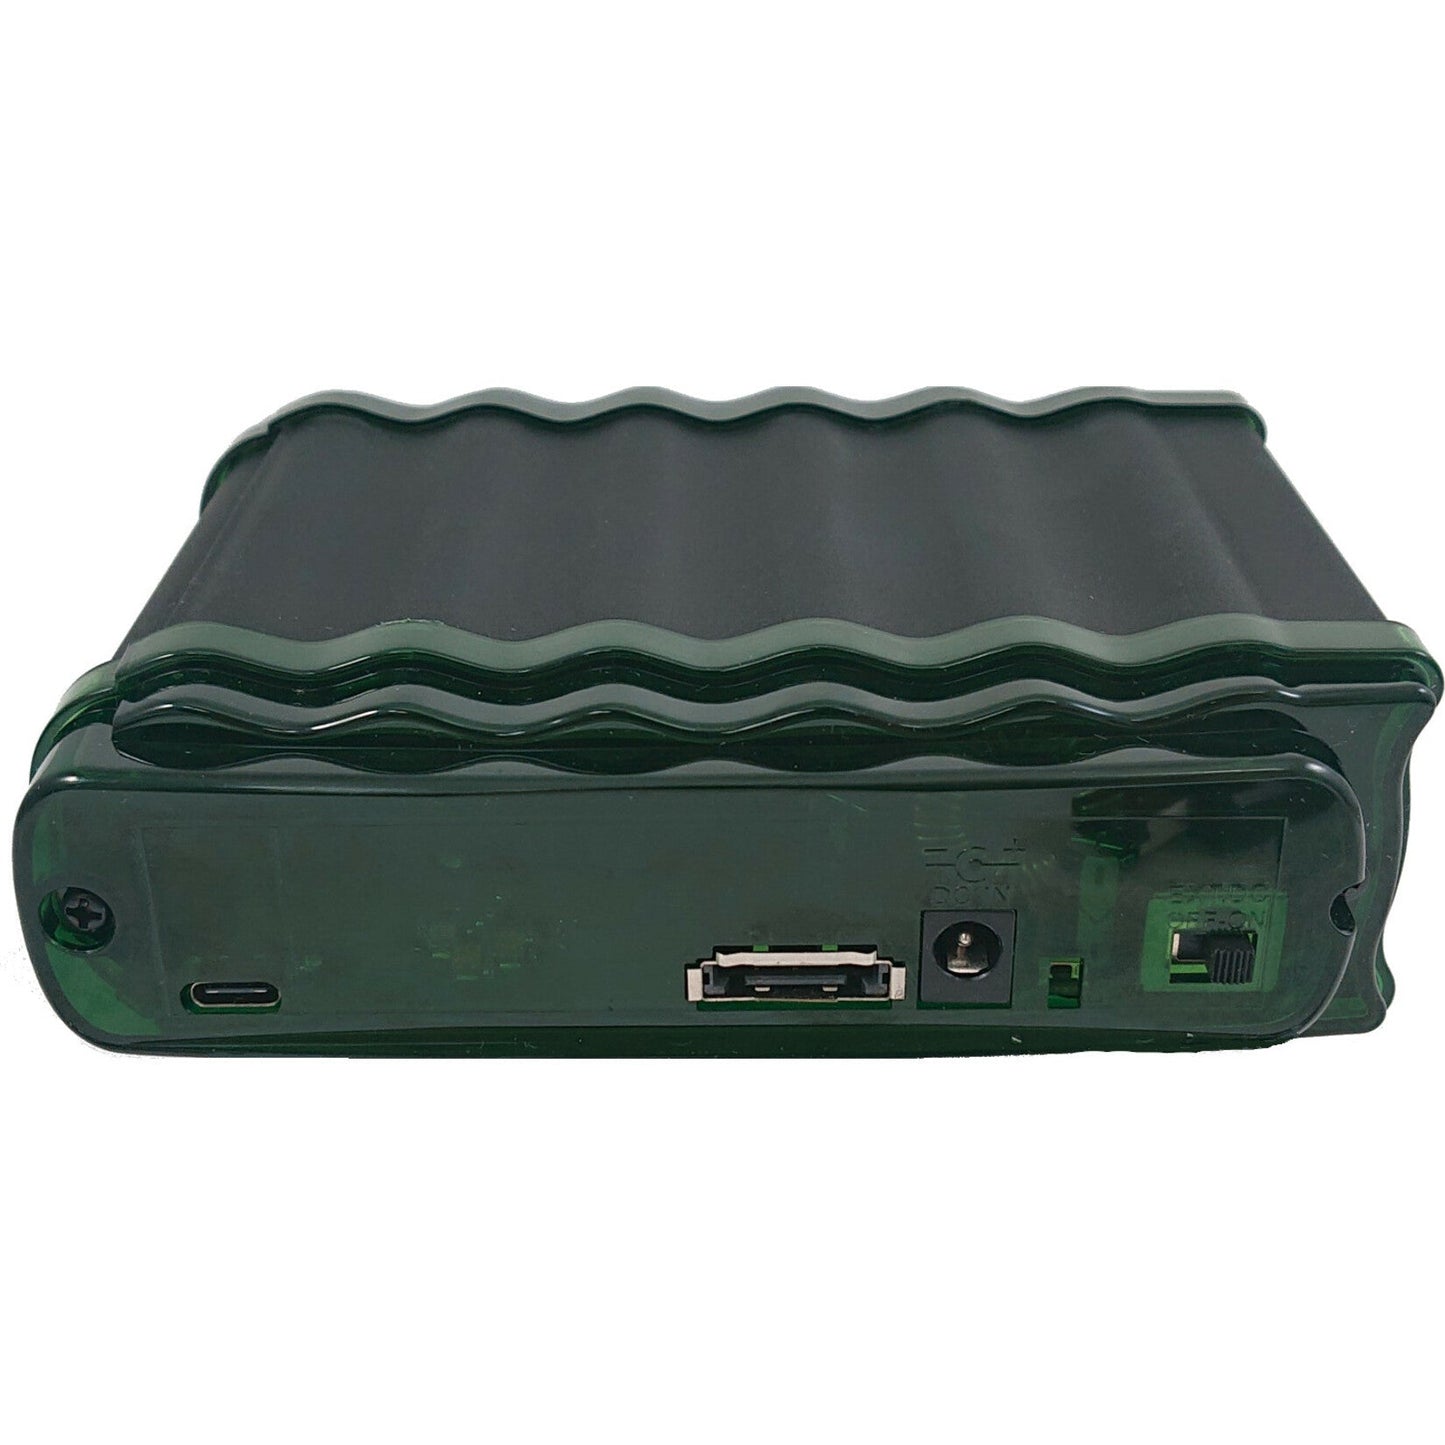 Buslink CipherShield CDSE-4TSDG2C 4 TB Portable Solid State Drive - 2.5" External - SATA - TAA Compliant